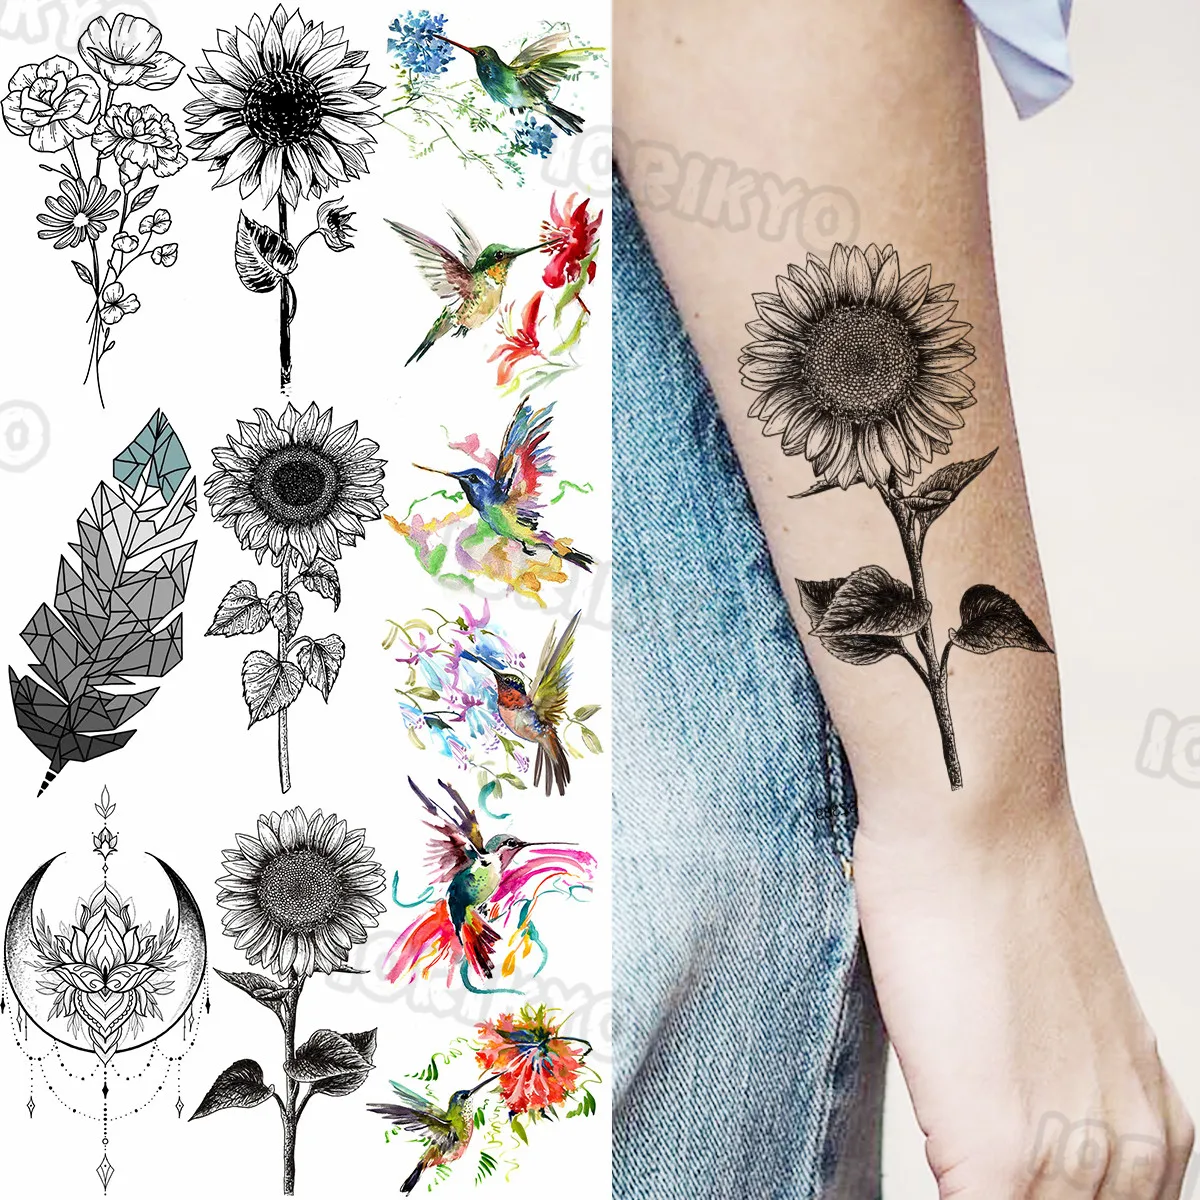 

Sunflower Small Temporary Tattoos For Women Girls Realistic Henna Watercolor Hummingbird Fake Tattoo Sticker Arm Body Tatoos 3D